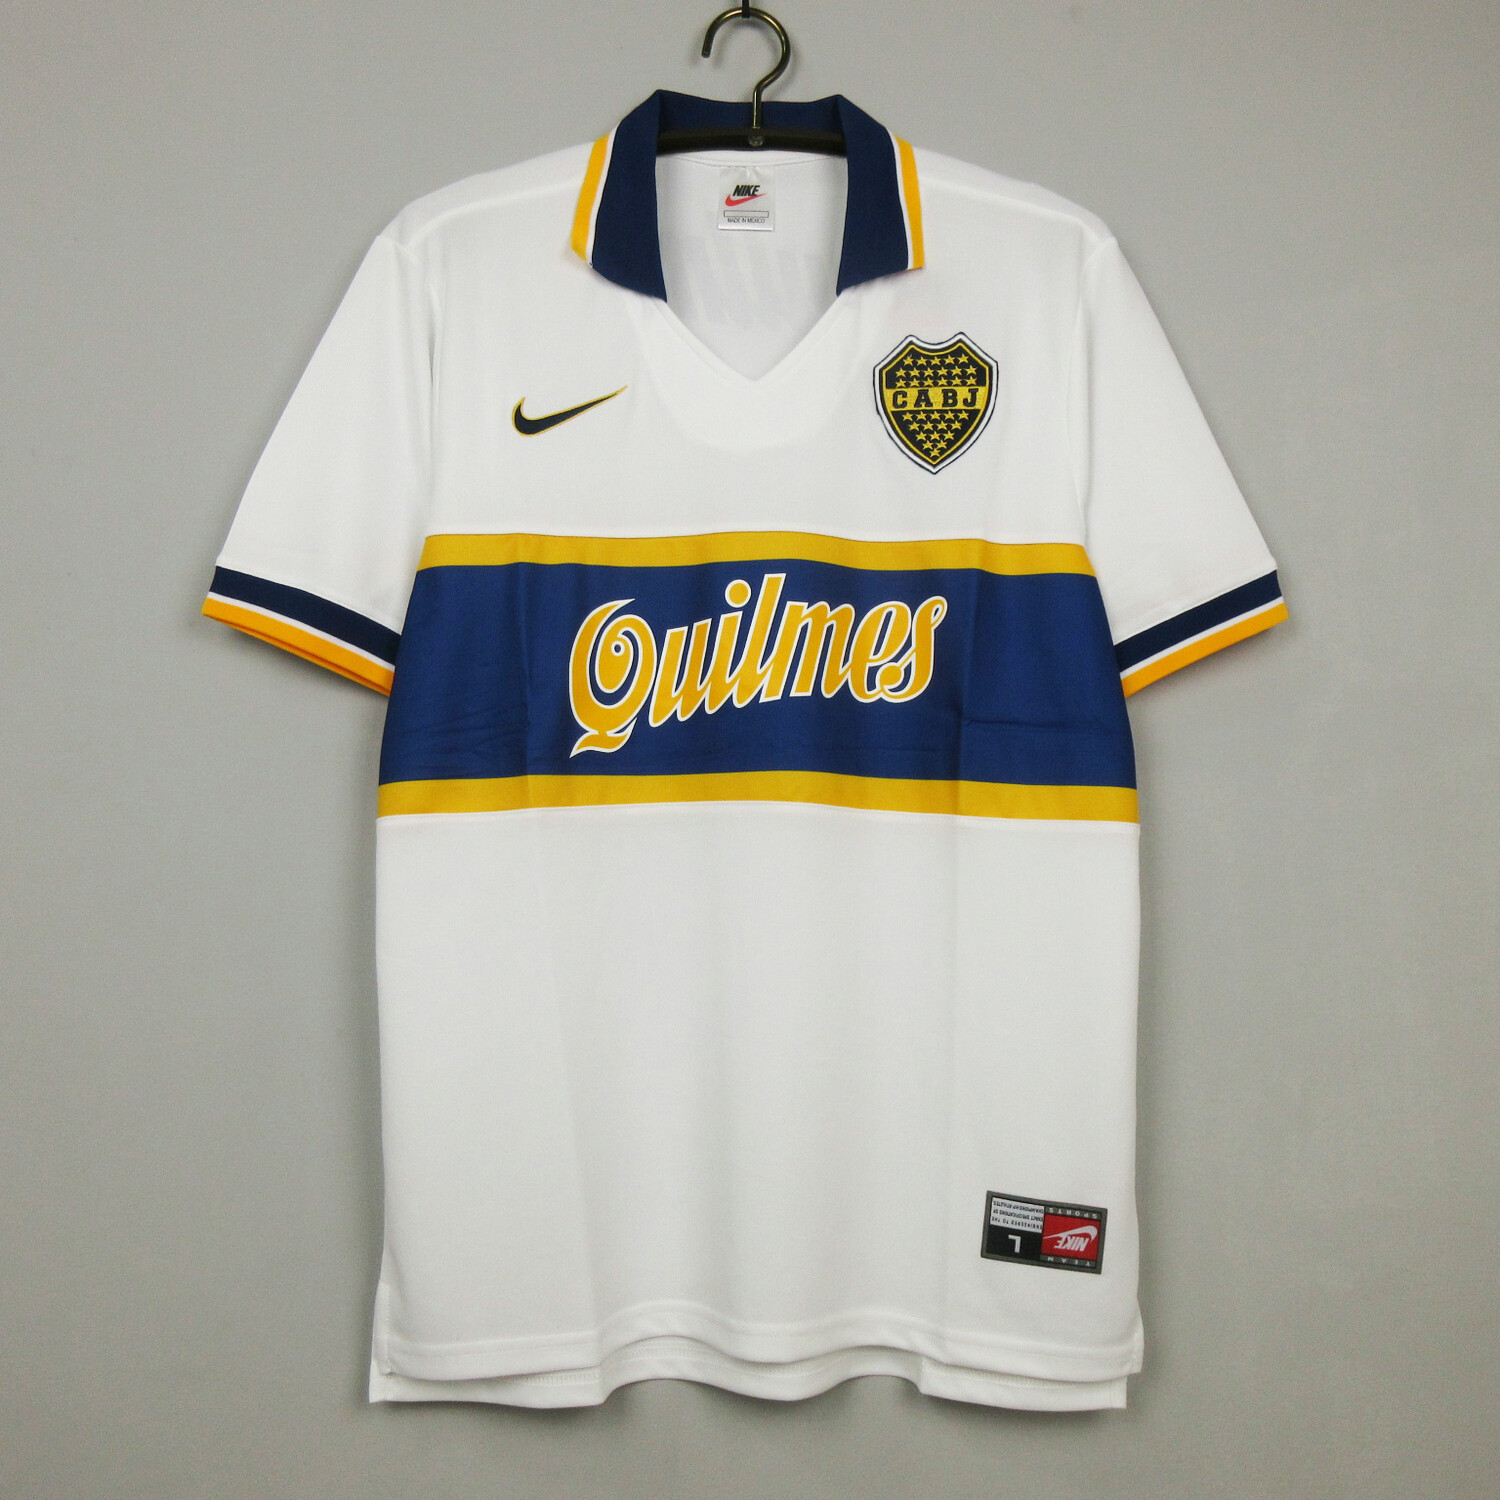 Camisa Boca Juniors away - Retrô -1996/97